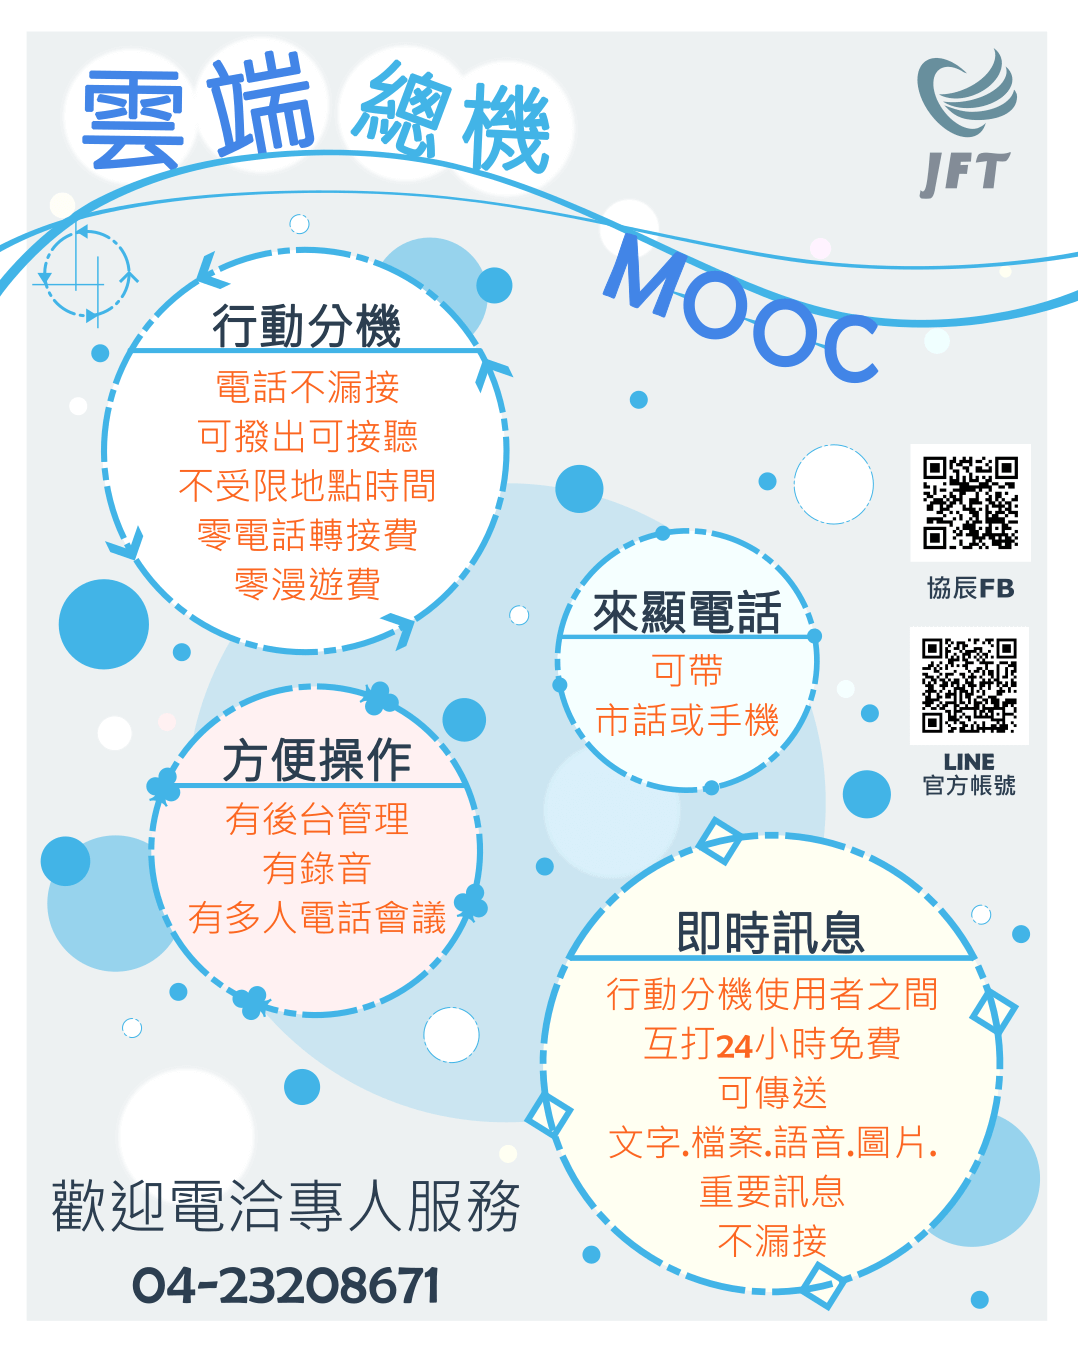 MOOC雲端總機DM，行動分機方便操作。